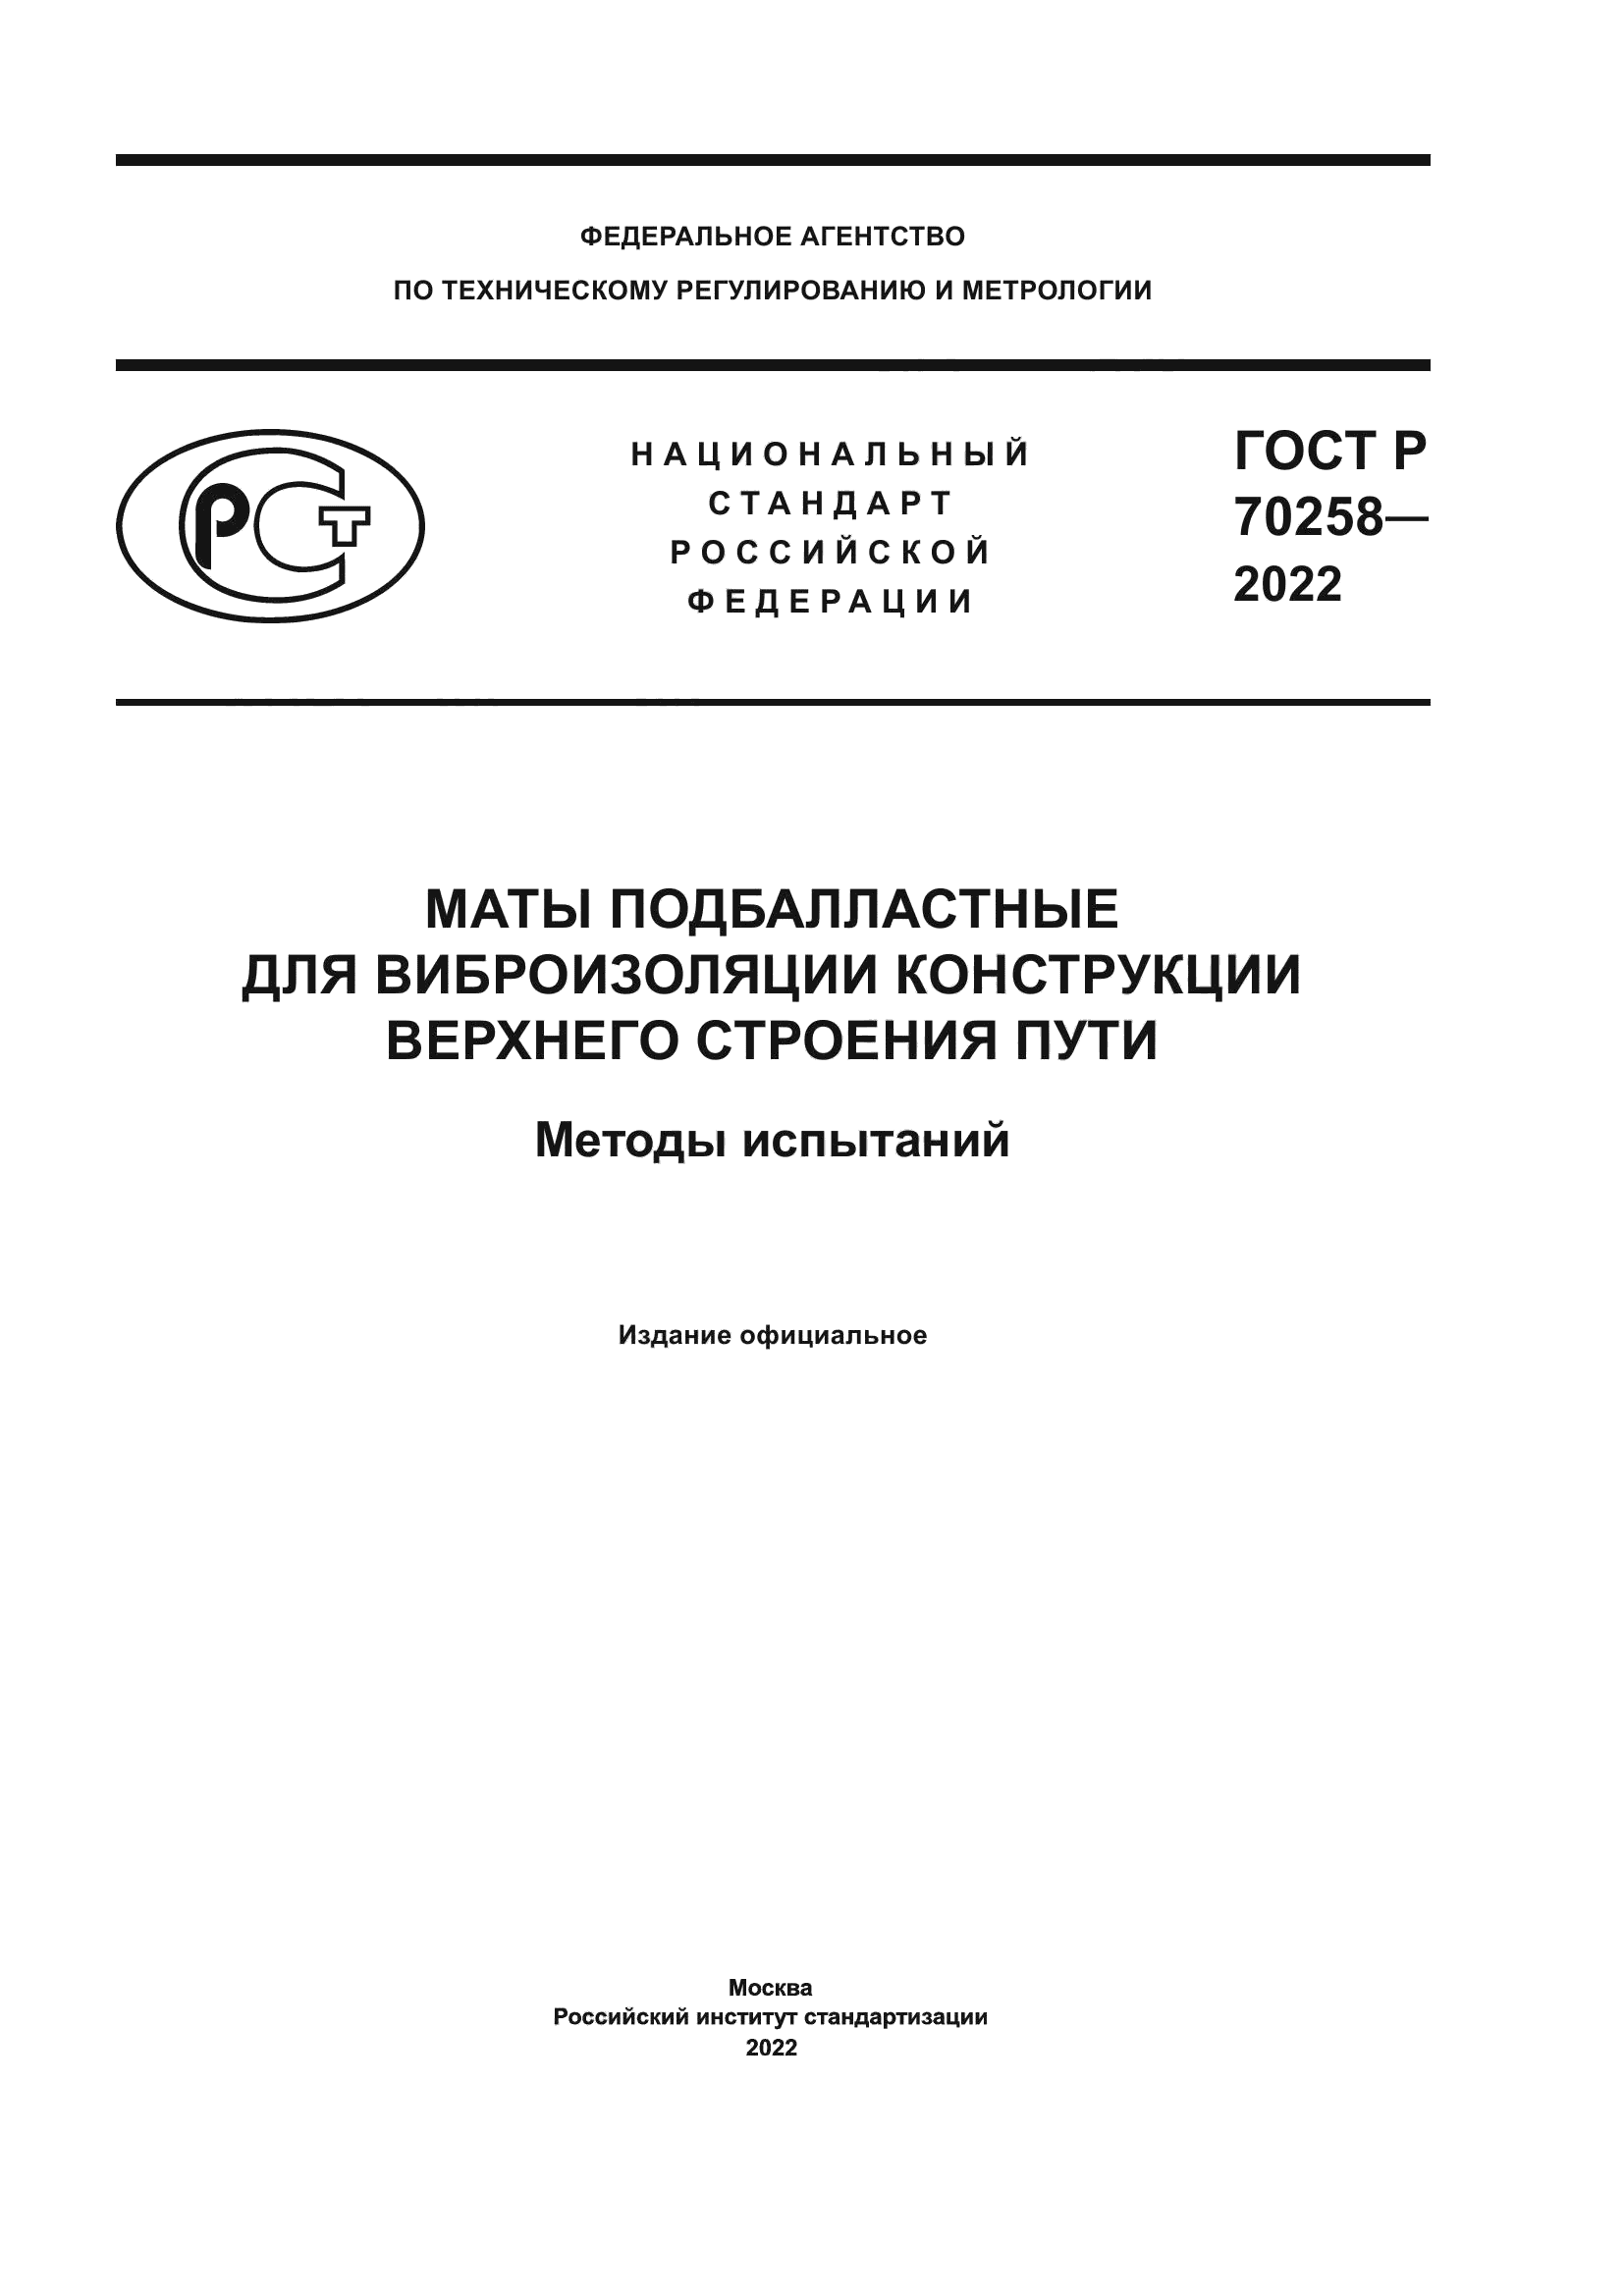 ГОСТ Р 70258-2022